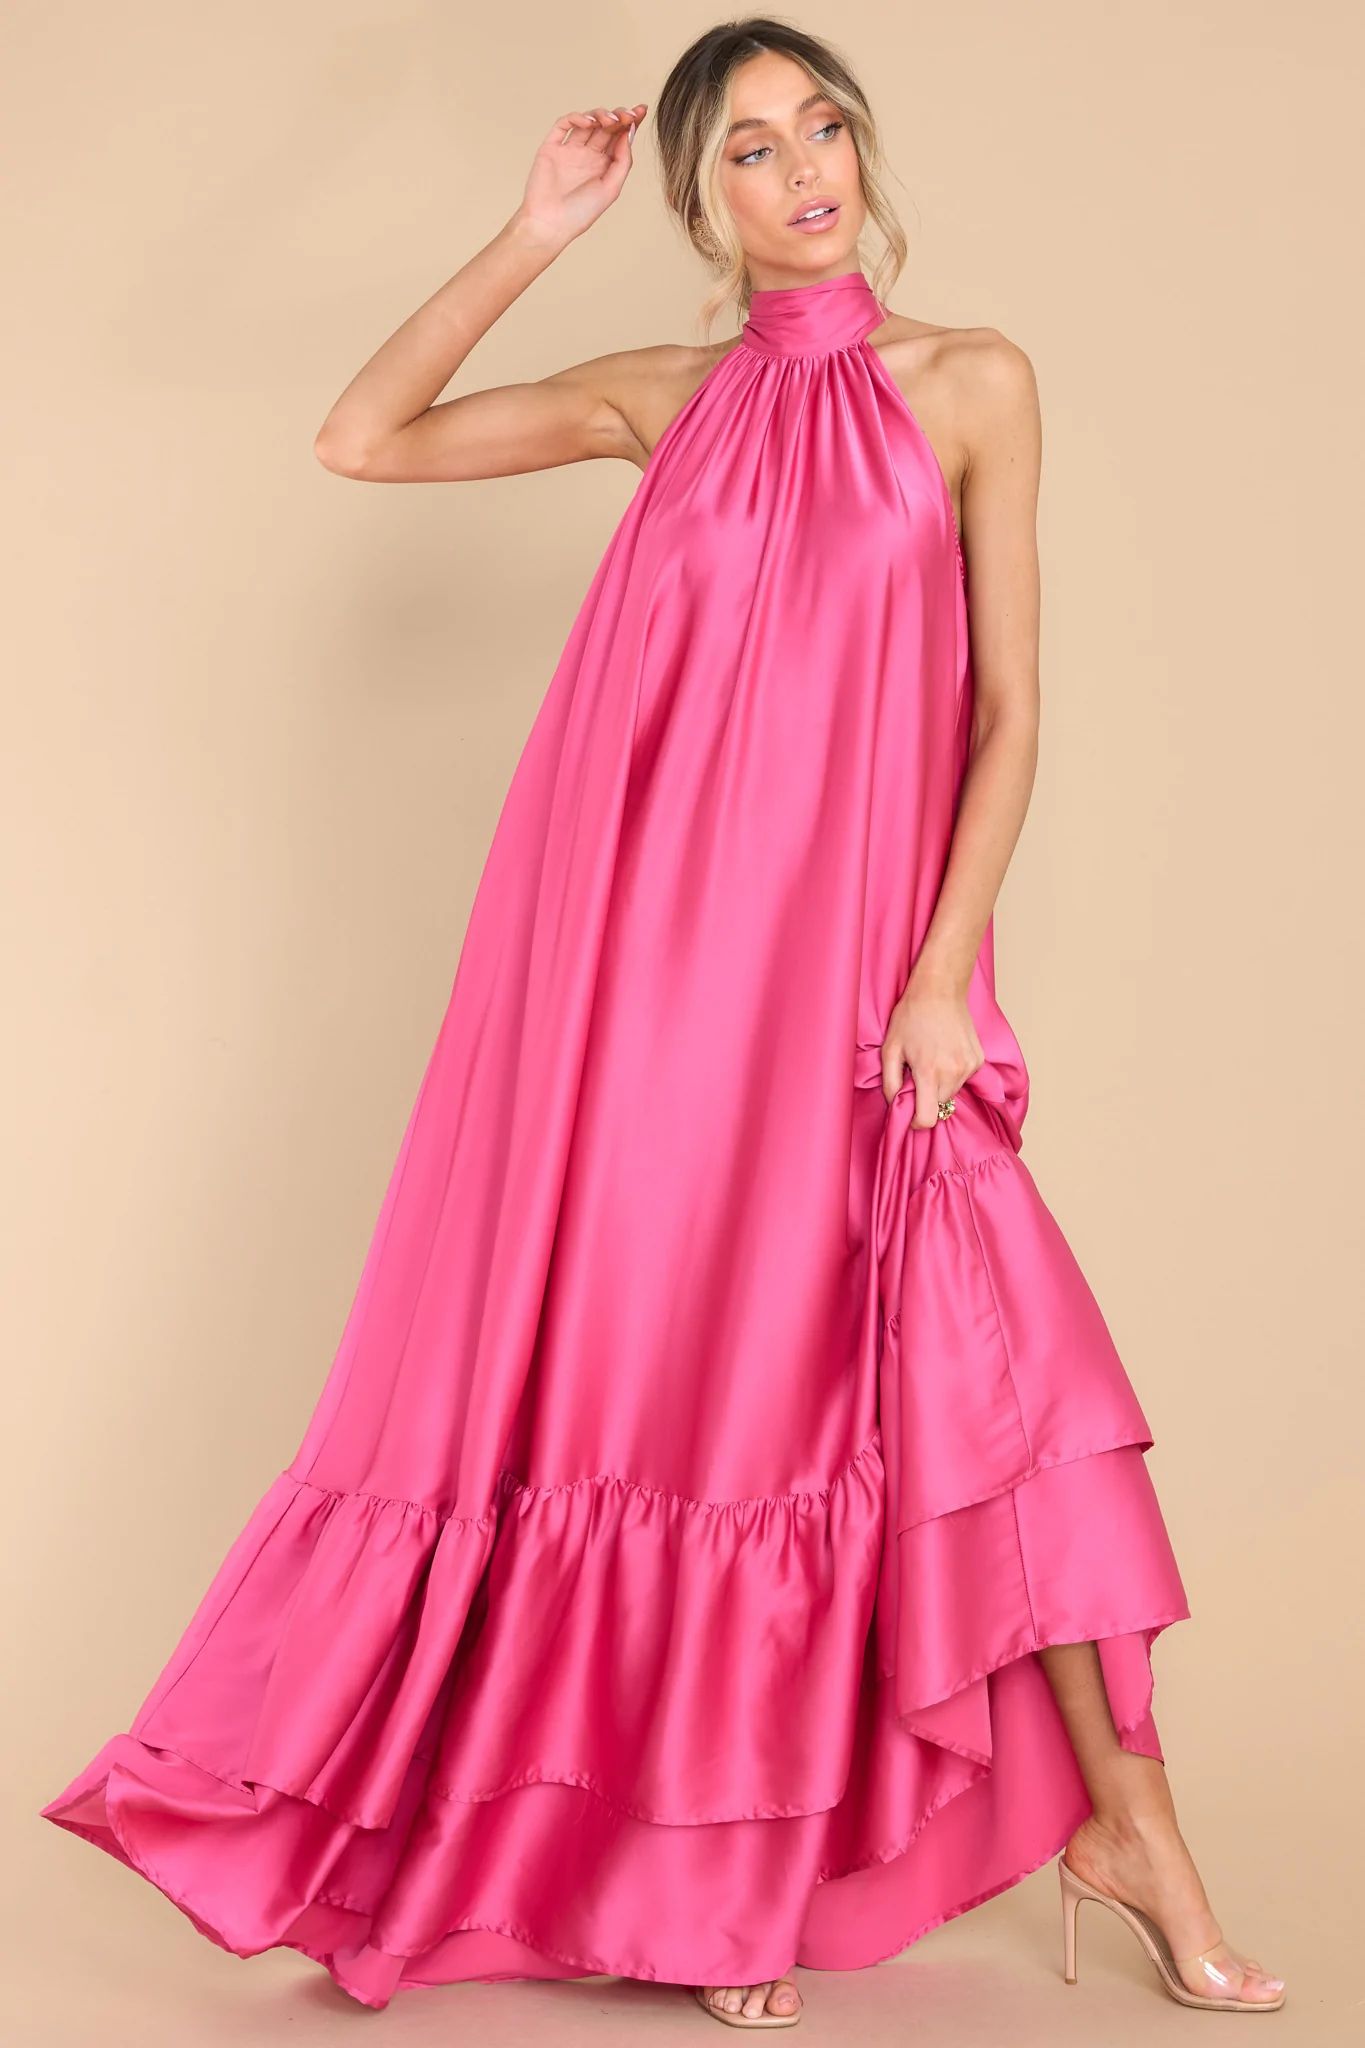 Talk About Beauty Hot Pink Maxi Dress | Red Dress 